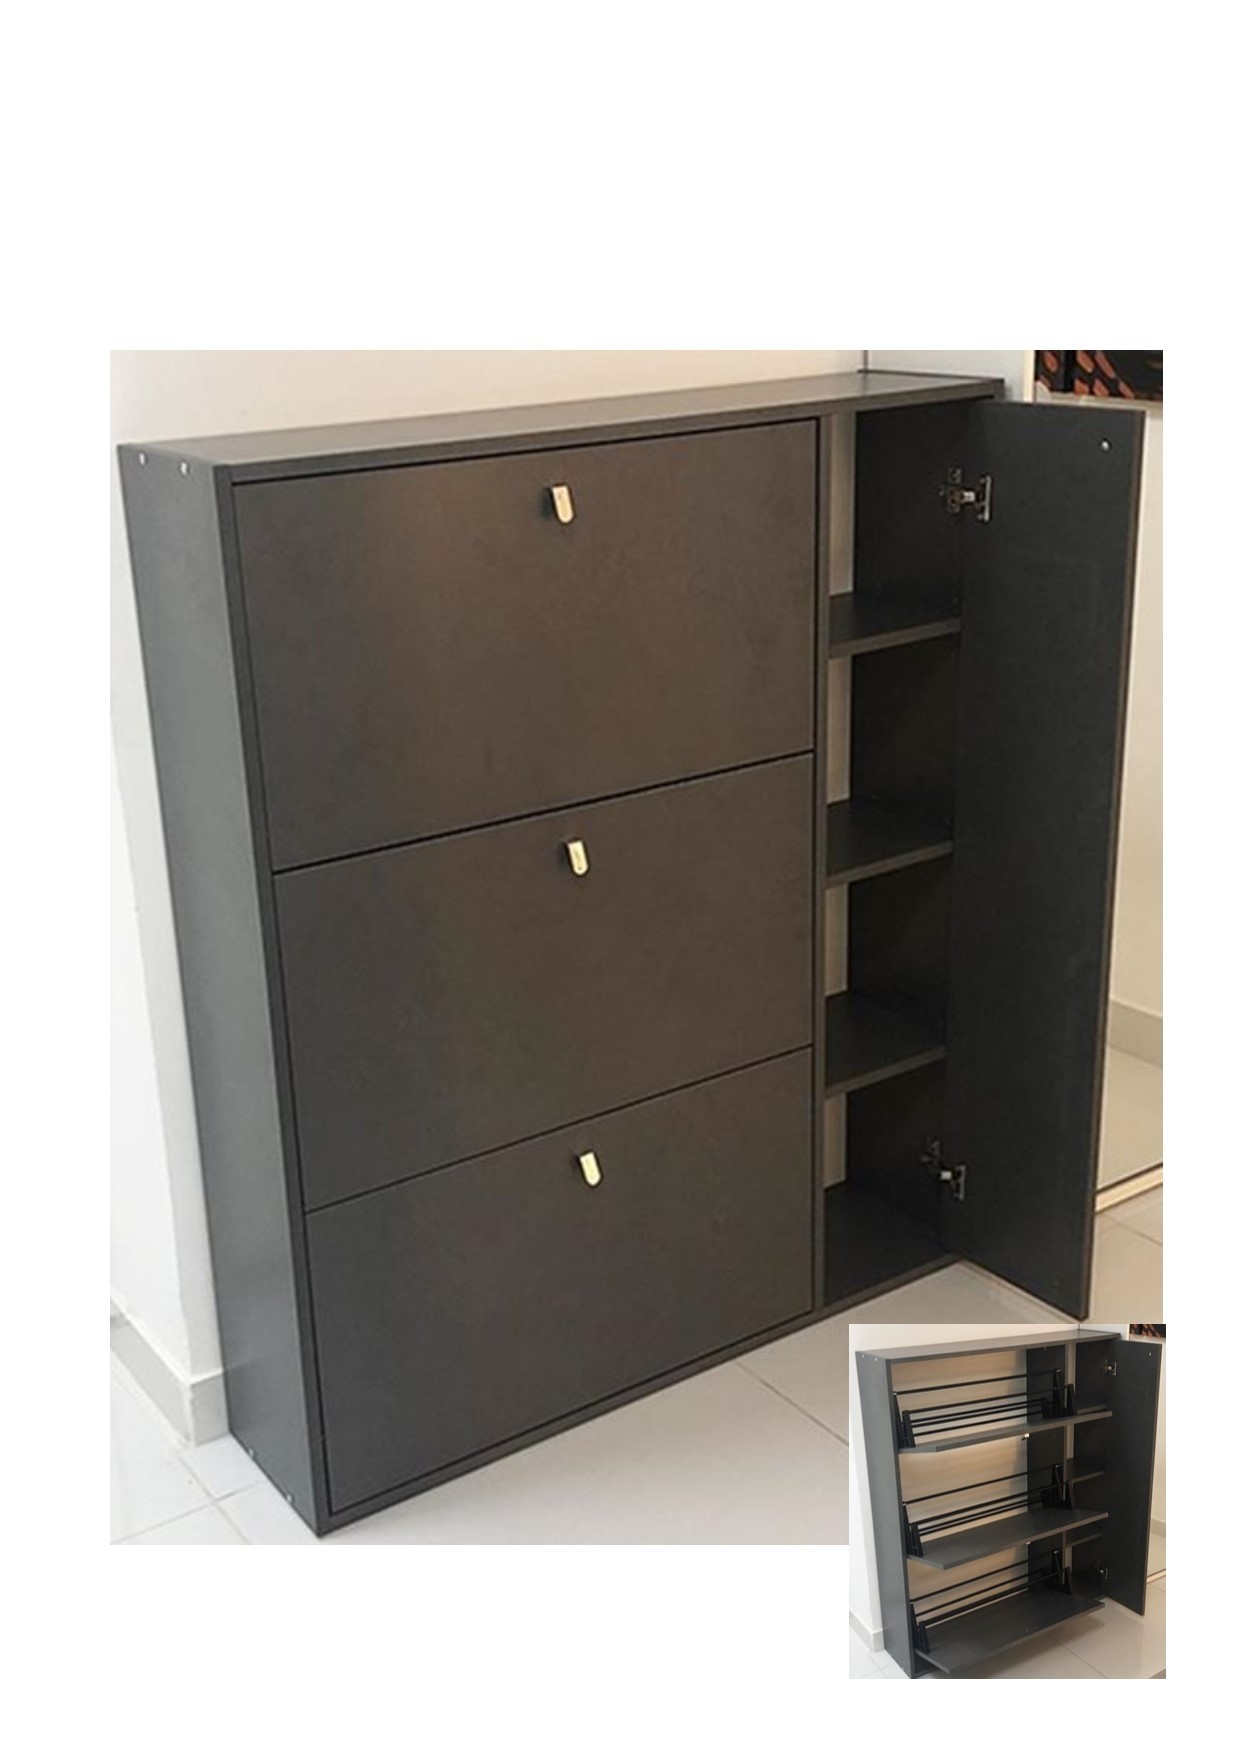 Shoe cabinet 4 doors in black color idea workmate